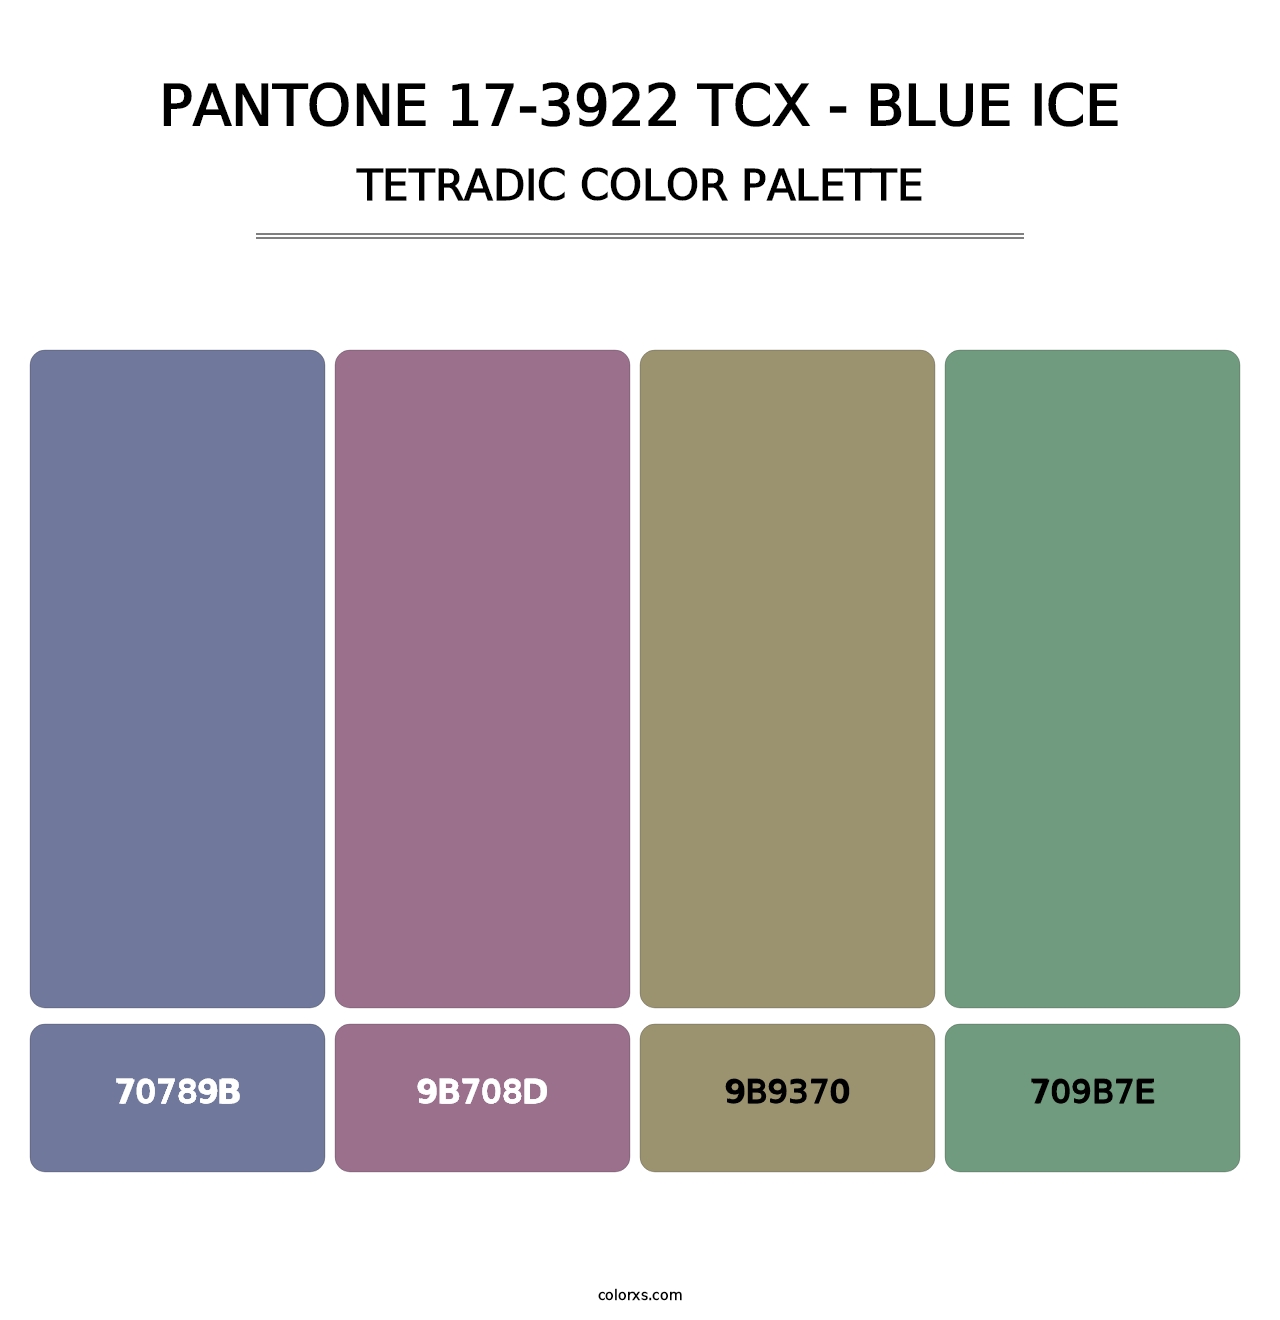 PANTONE 17-3922 TCX - Blue Ice - Tetradic Color Palette